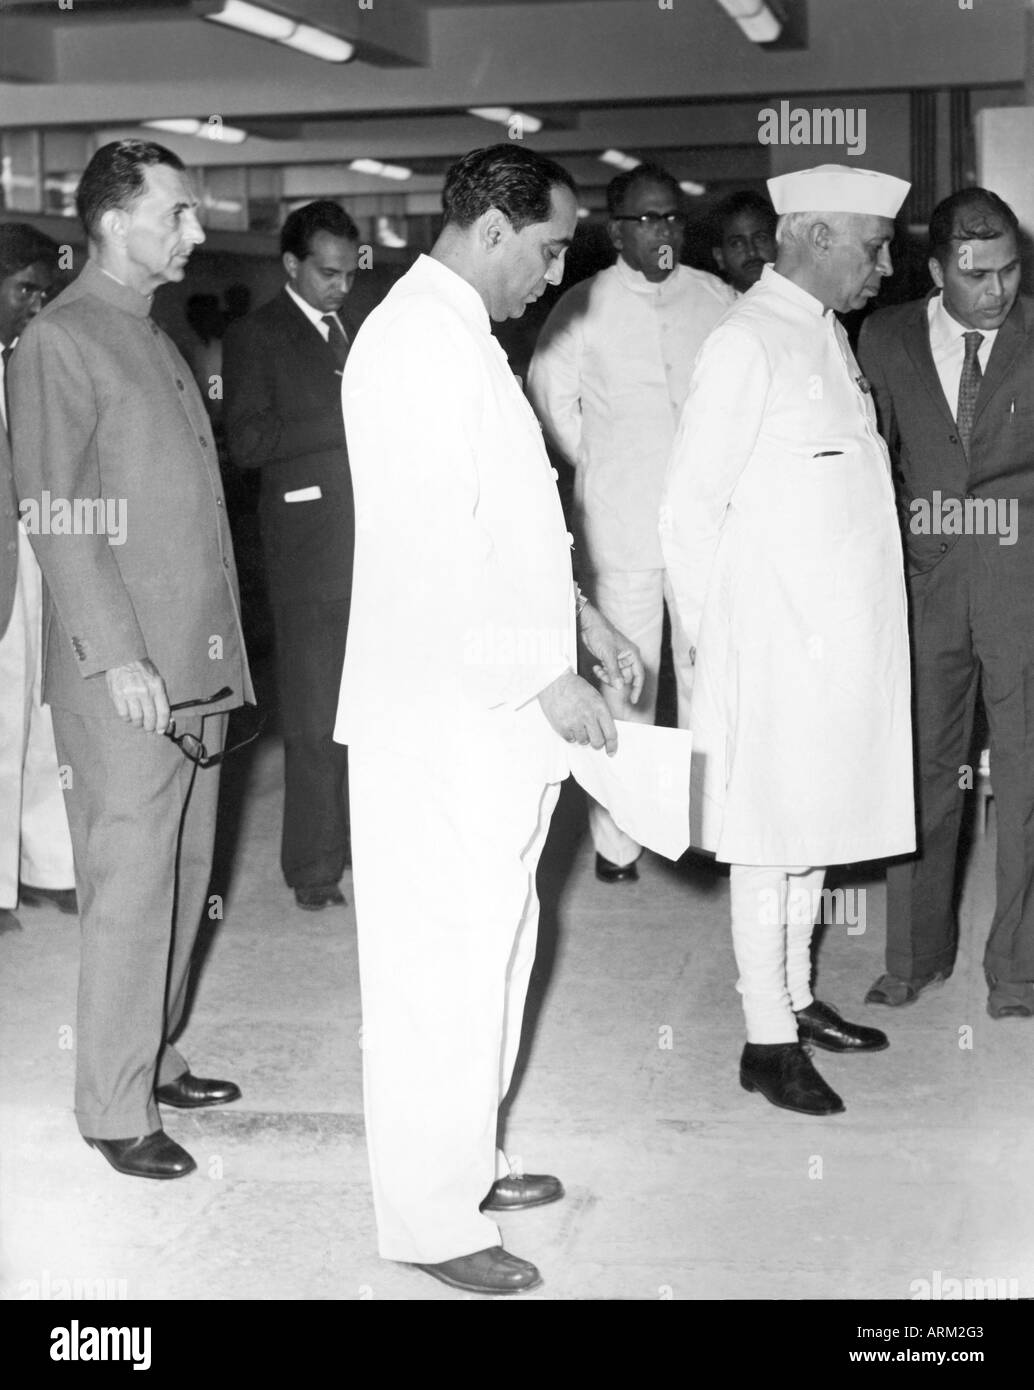 VRB101469 Portrait of J R D TATA Dr Bhaba and Pandit Jawaharlal Nehru India 1940 s Stock Photo